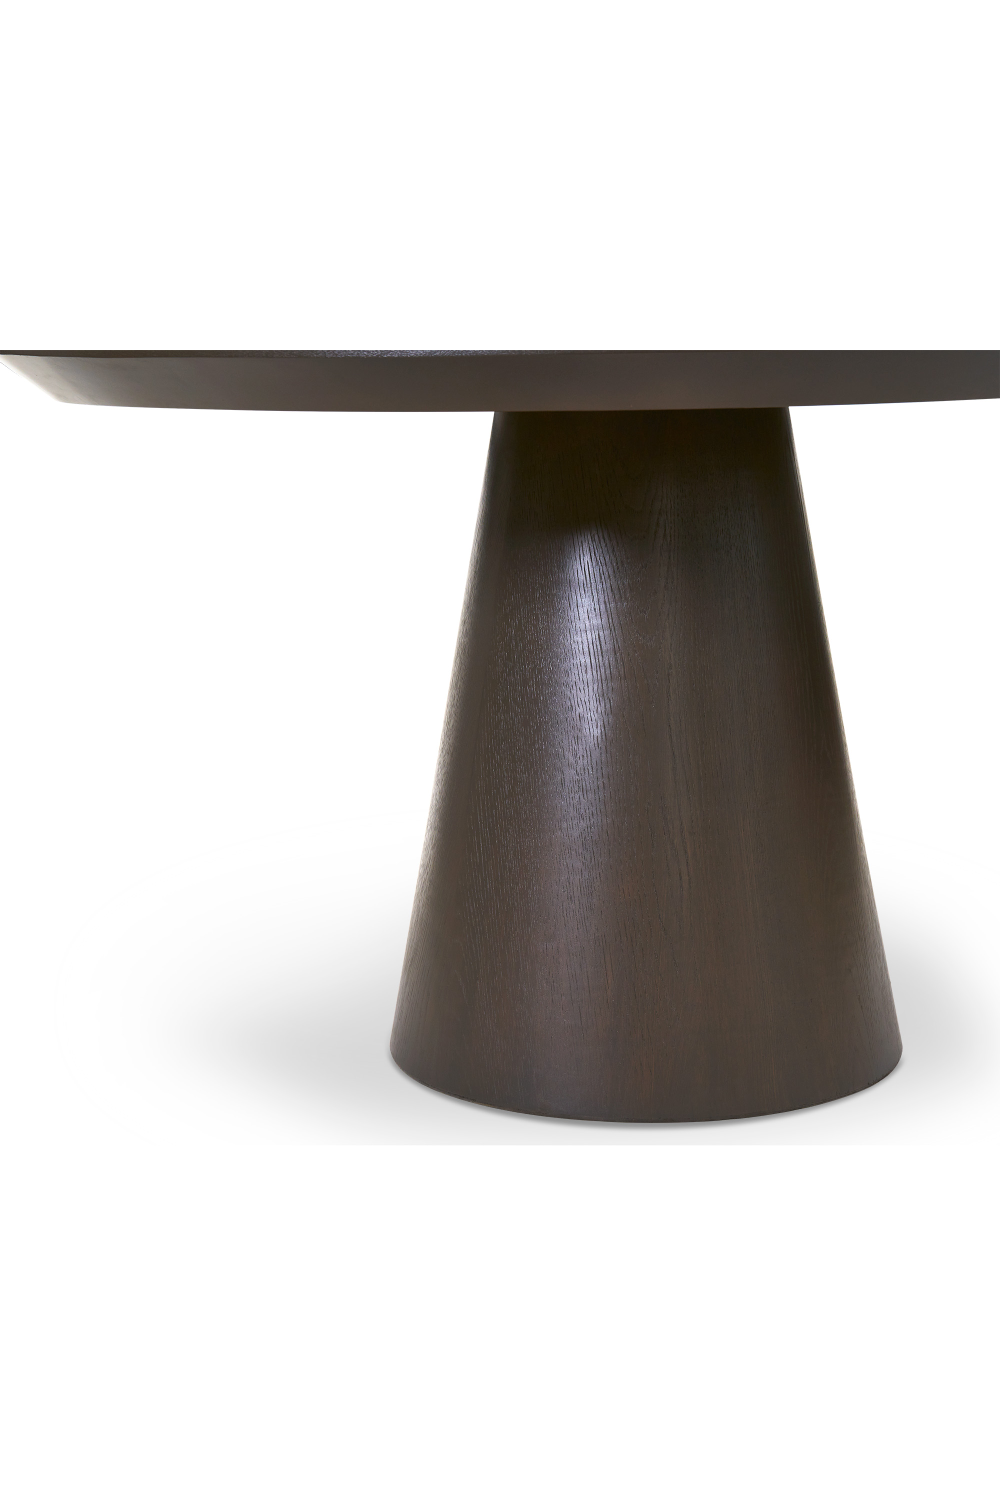 Oak Pedestal Dining Table | Liang & Eimil Herzog | Oroa.com